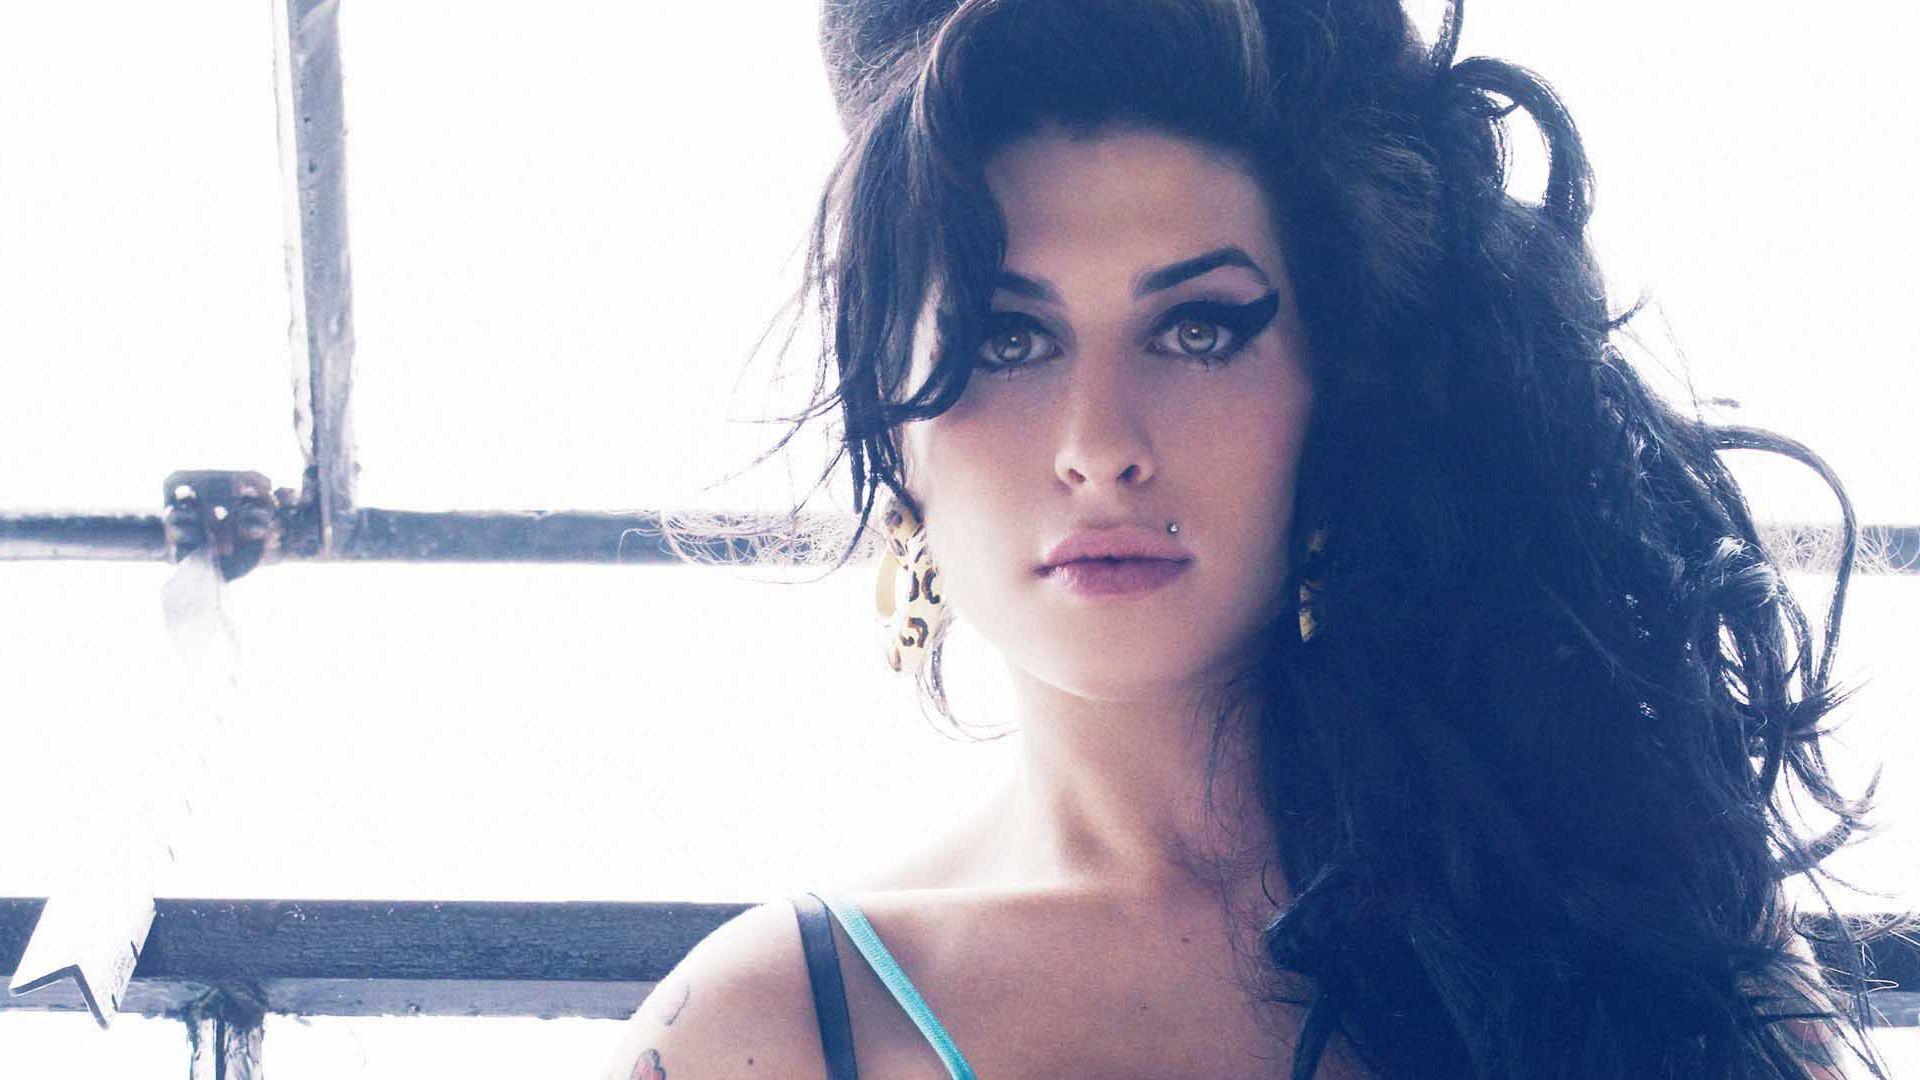 Amy Winehouse Wallpaper Free Amy Winehouse Background